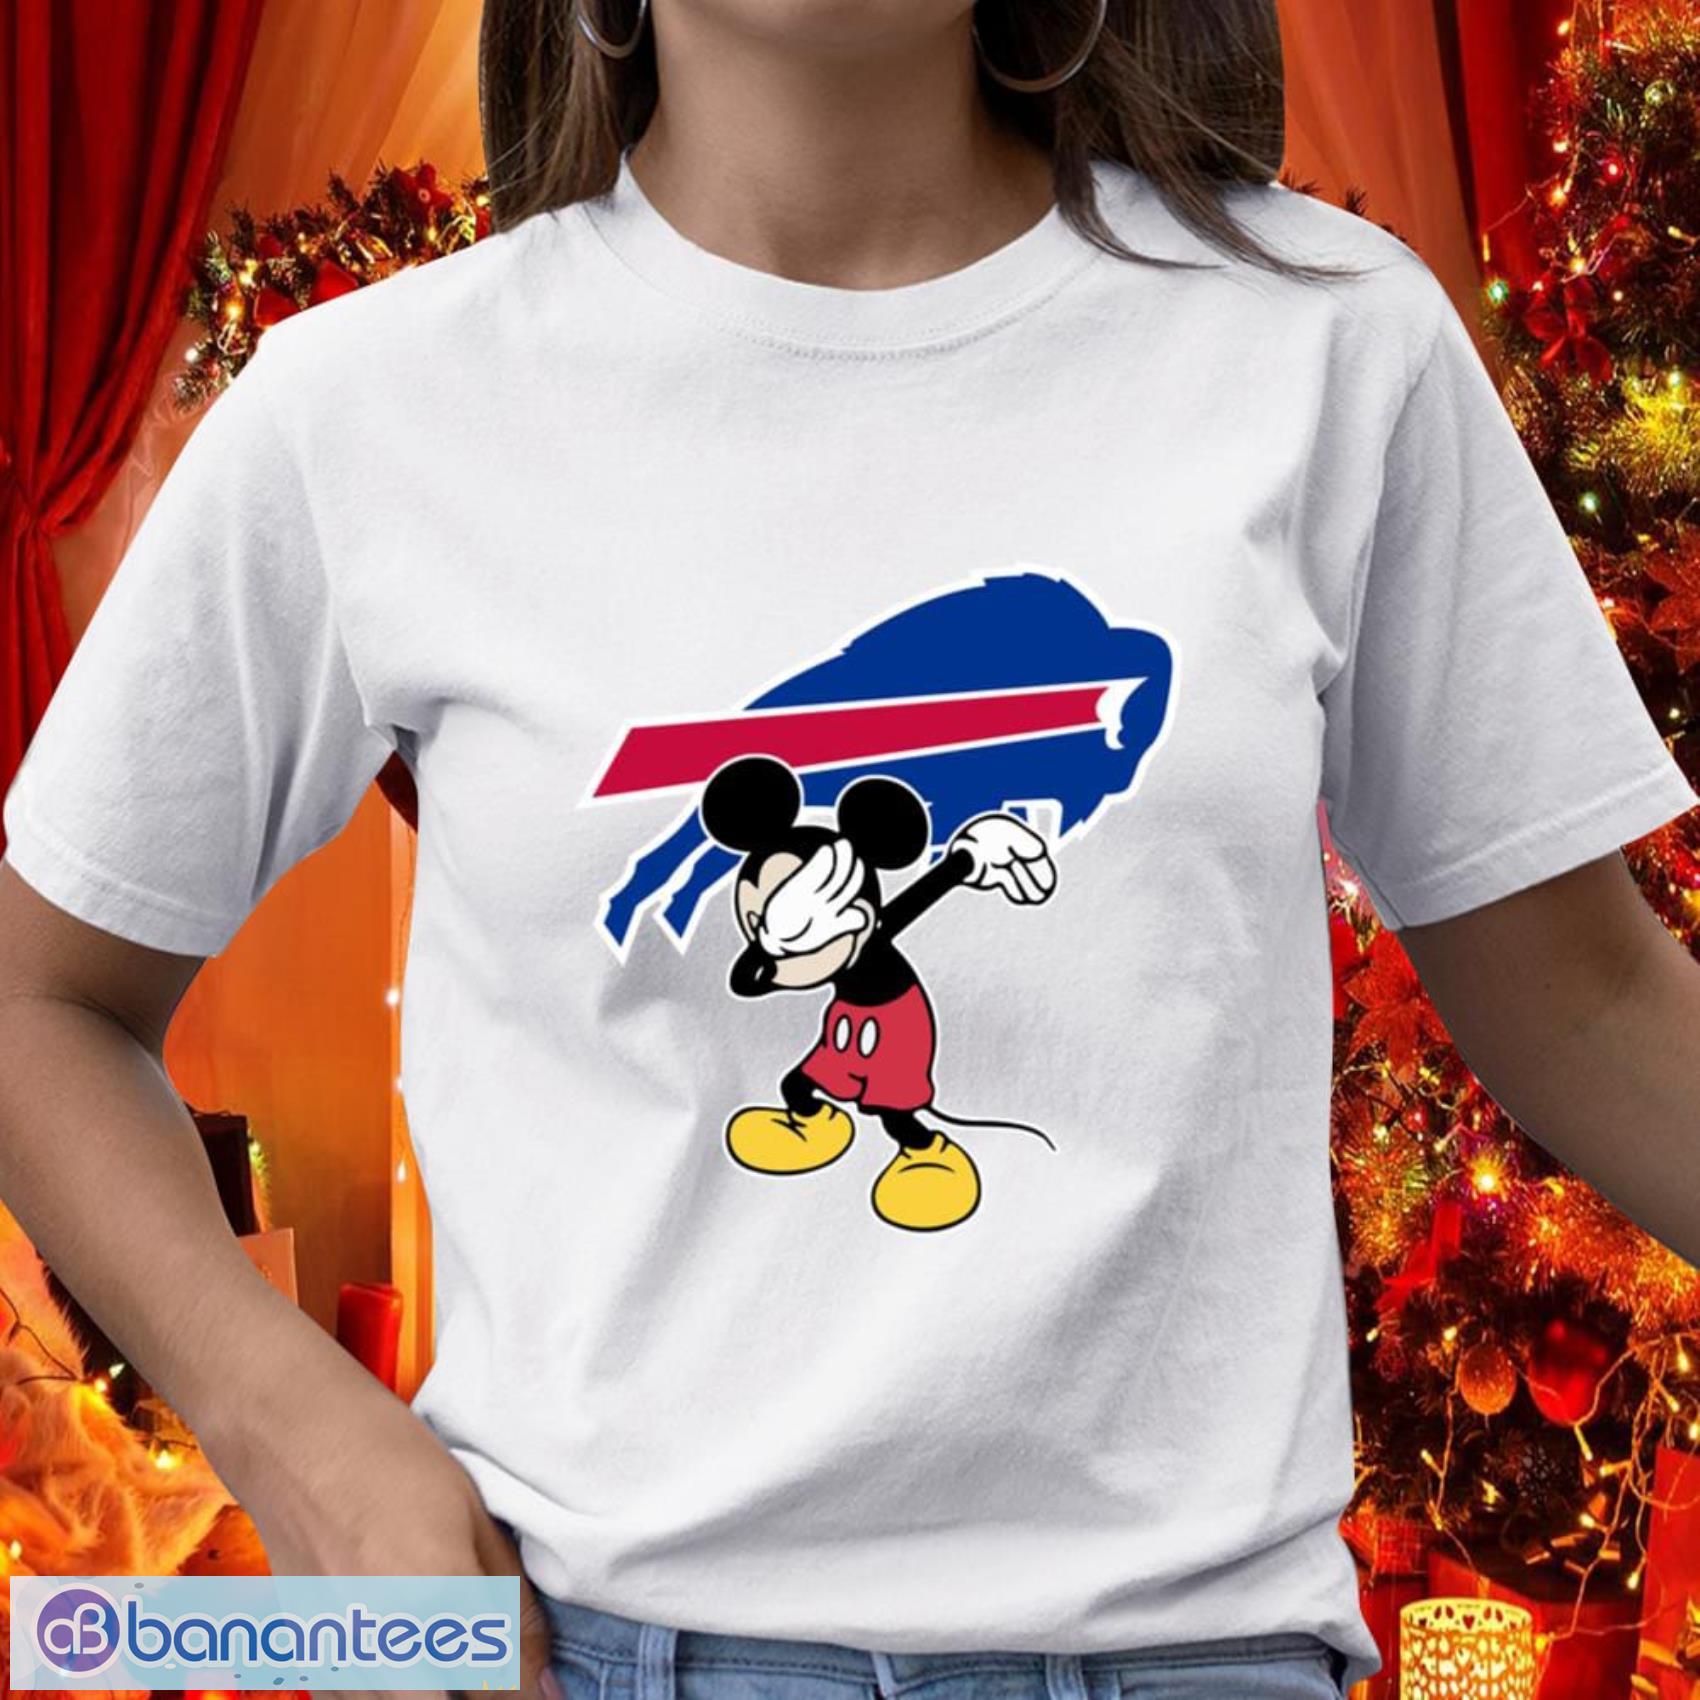 Buffalo Bills NFL Football Gift Fr Fans Dabbing Mickey Disney Sports T Shirt - Buffalo Bills NFL Football Dabbing Mickey Disney Sports T Shirt_1